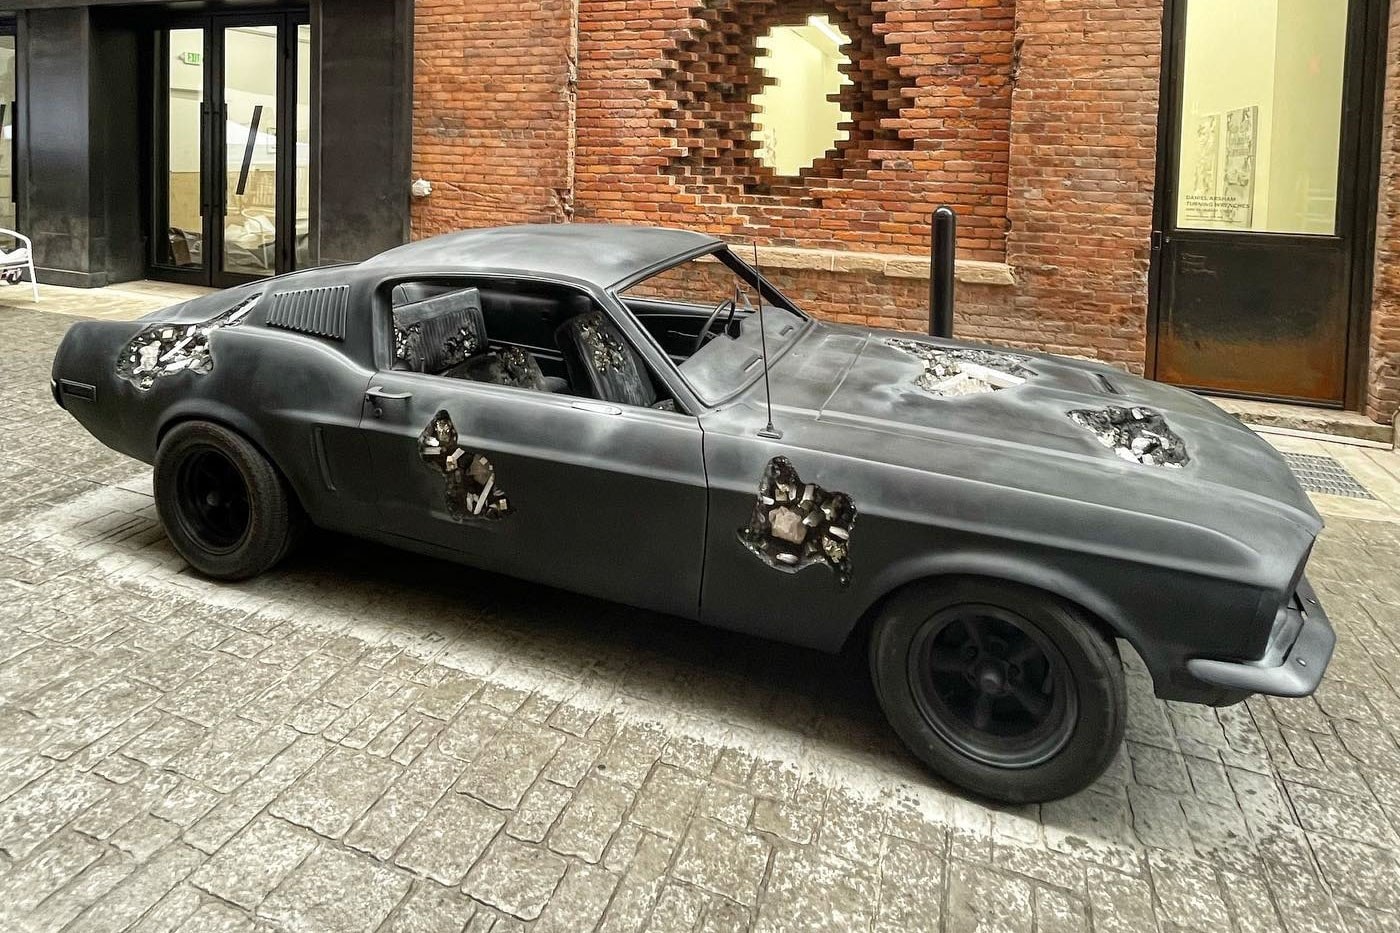 近賞 Daniel Arsham 打造 1968 Ford Mustang GT 經典車款雕塑